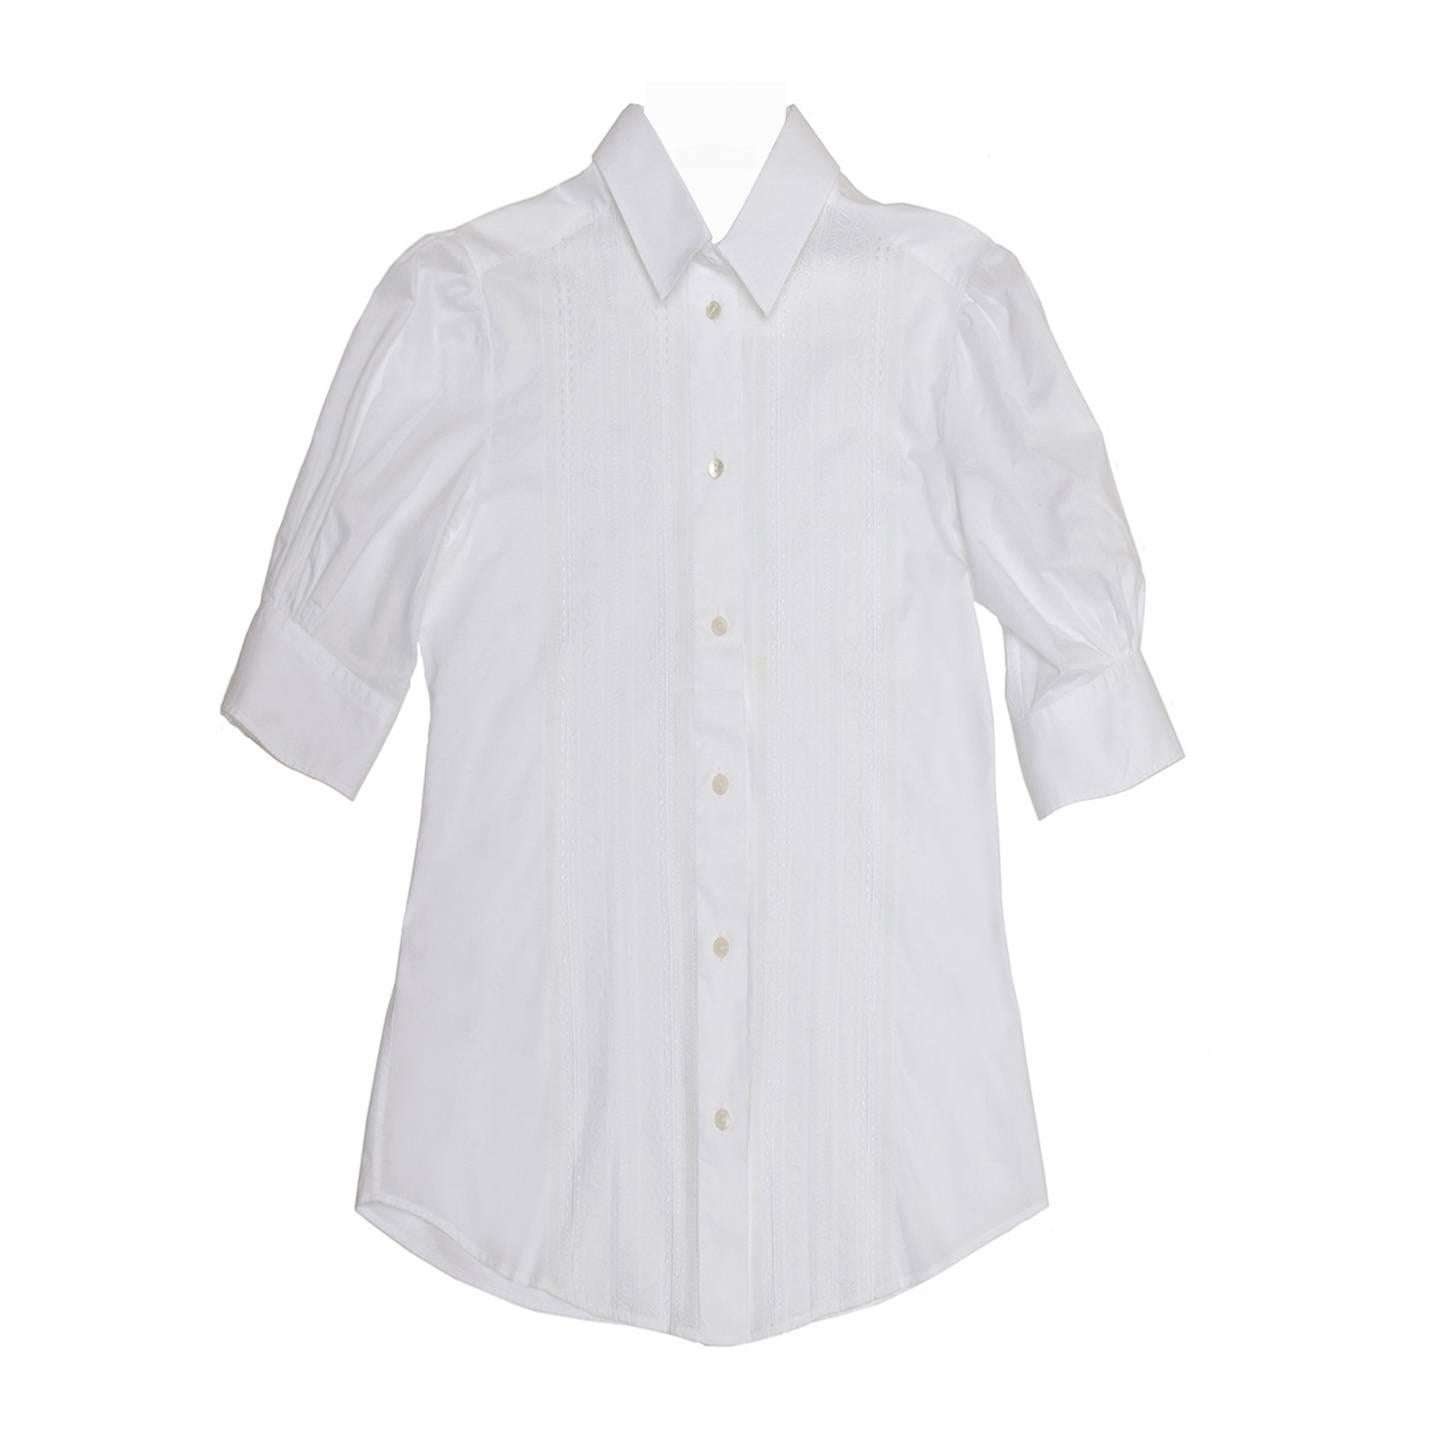 Dolce & Gabbana White Cotton & Lace Shirt For Sale